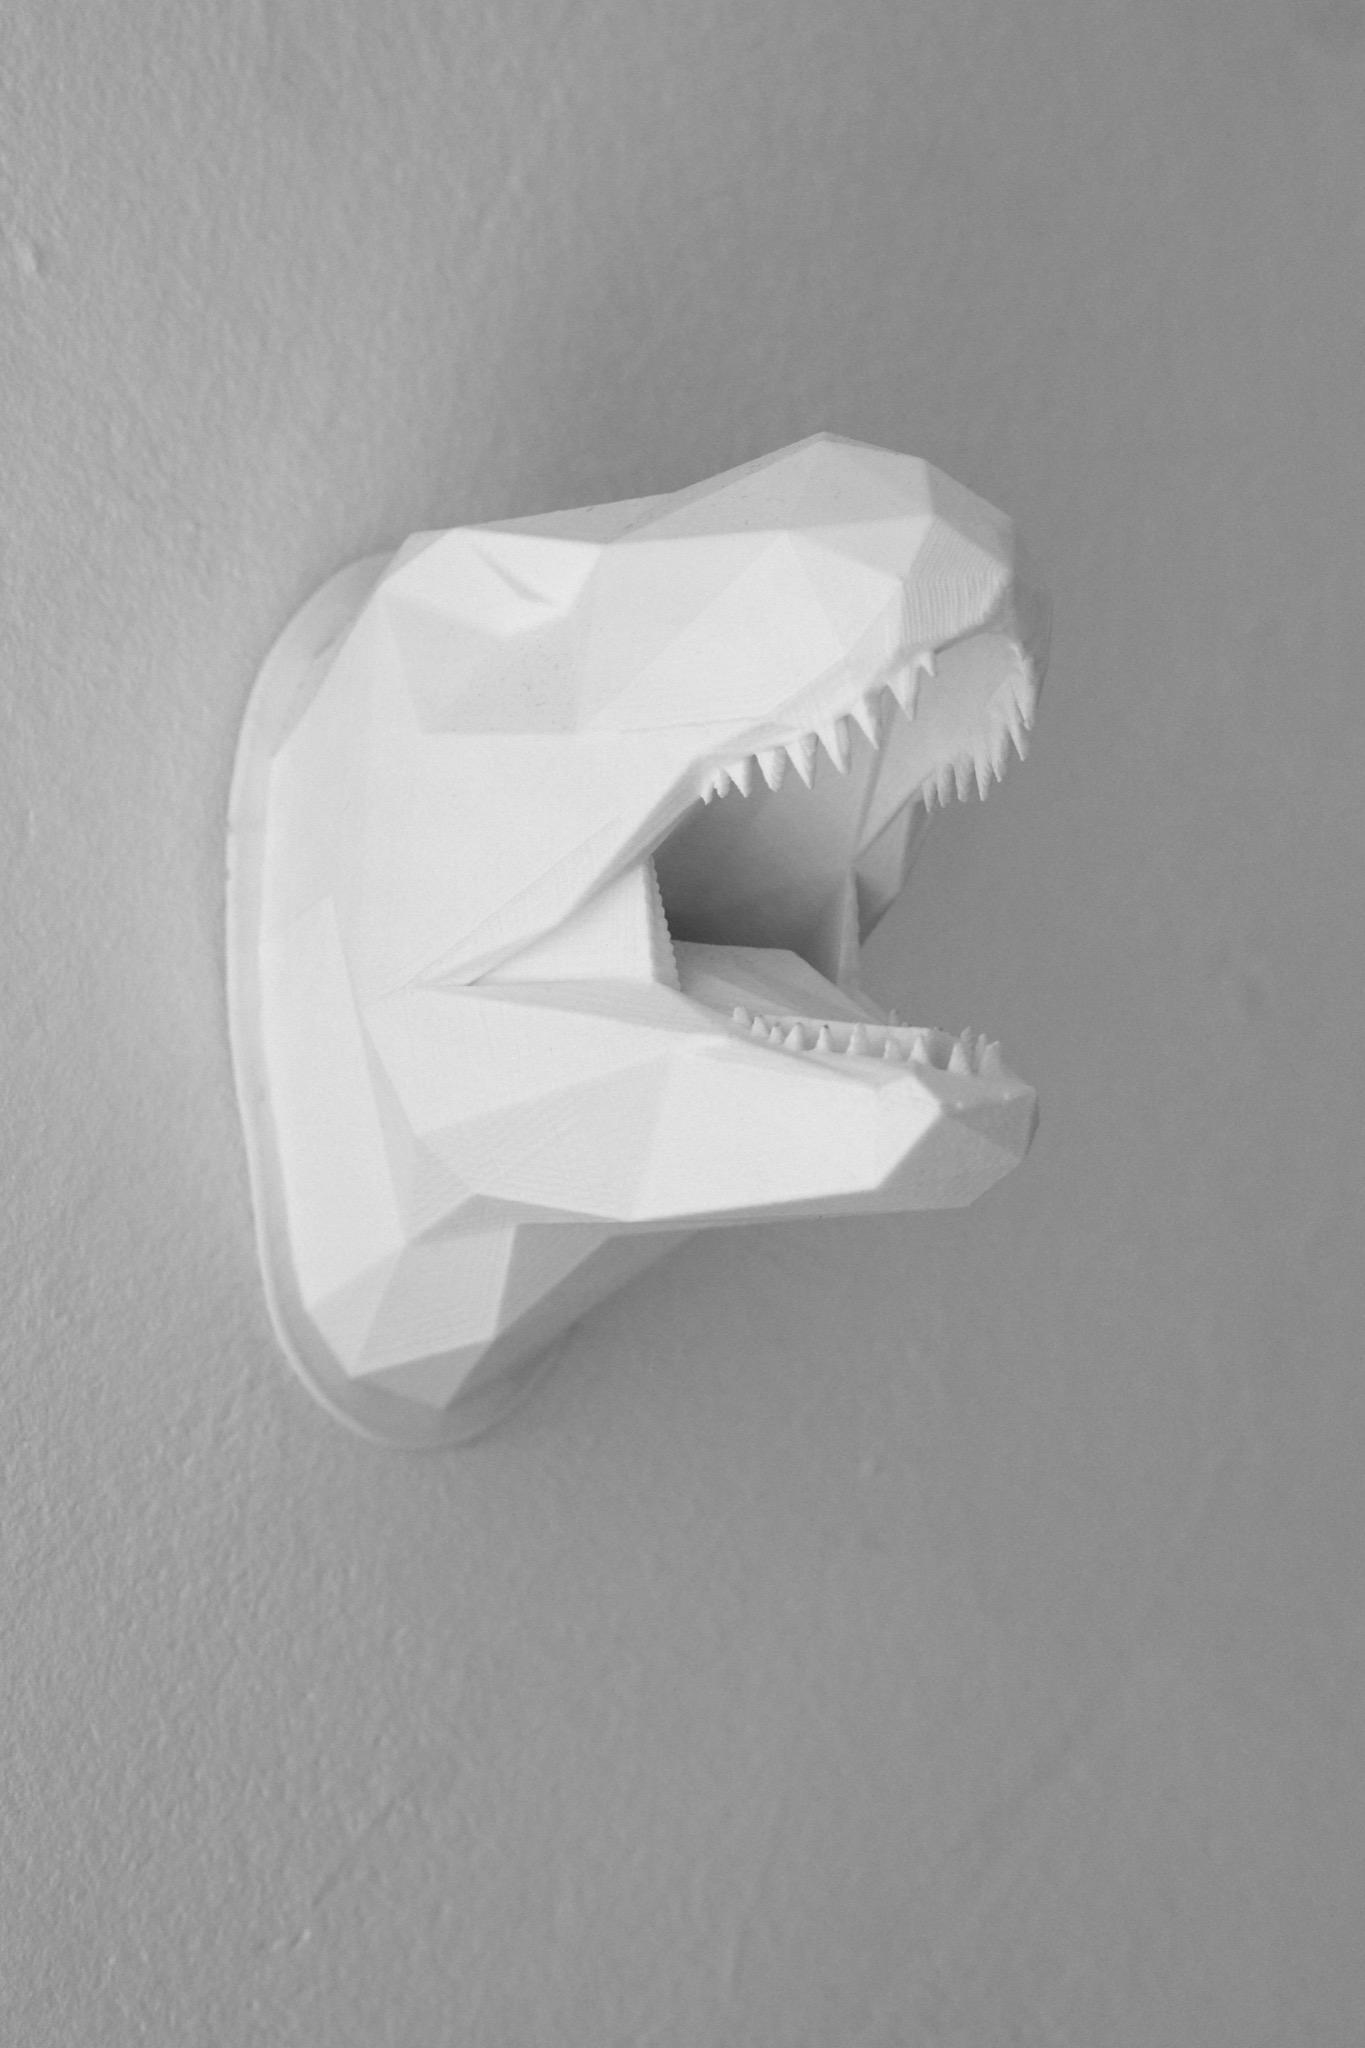 3D Printed_Faceted Rex Hanger_White_Wall_Space Junk_Alan Nguyen_2018.jpg